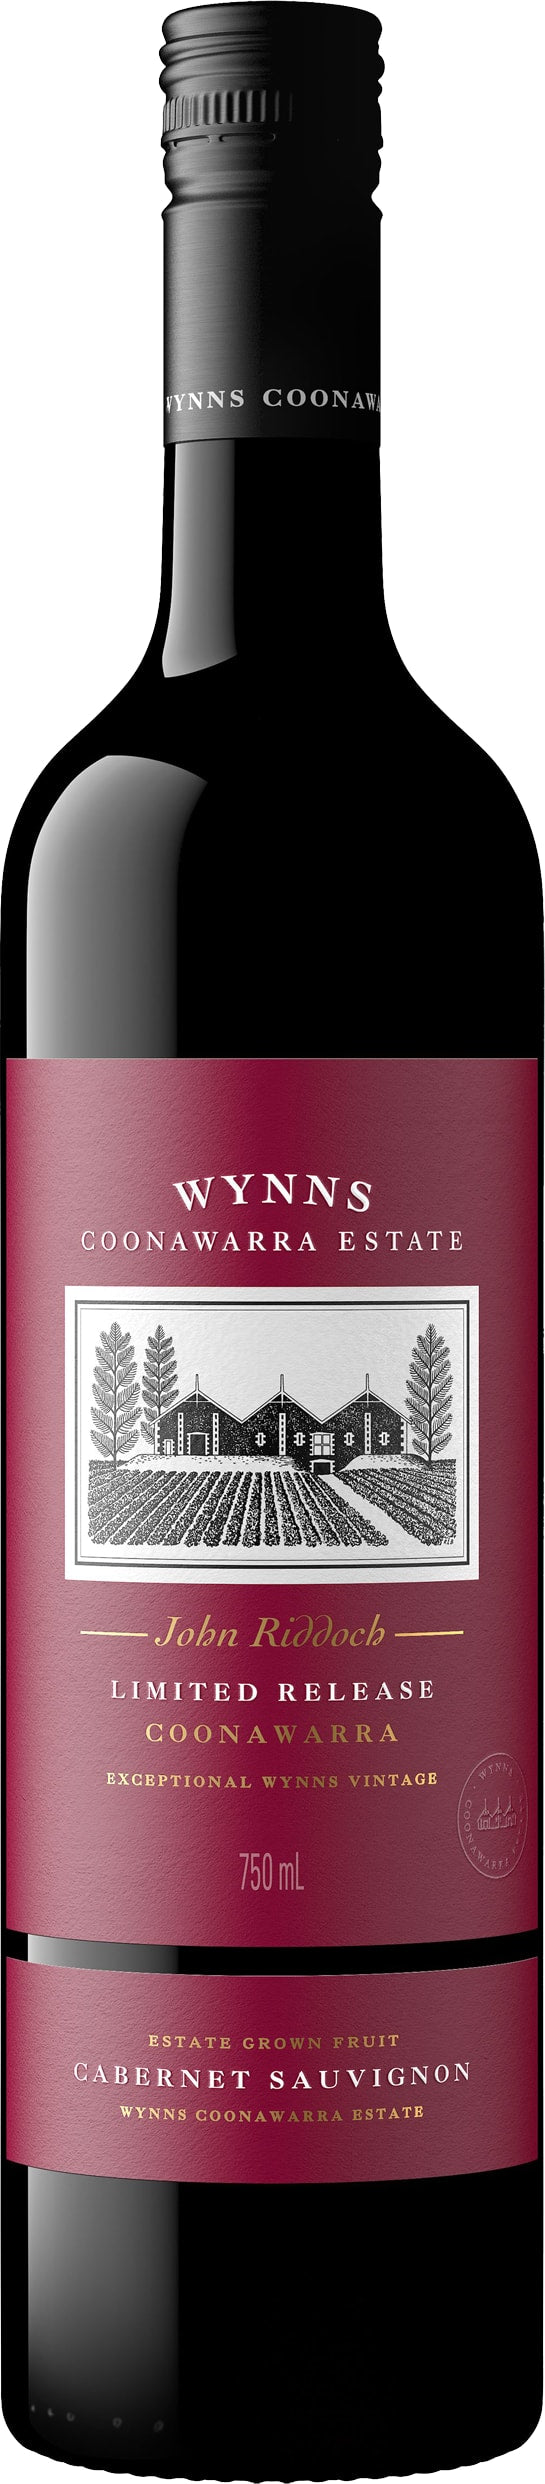 Wynns John Riddoch Limited Release Cabernet Sauvignon 2016 6x75cl - Just Wines 